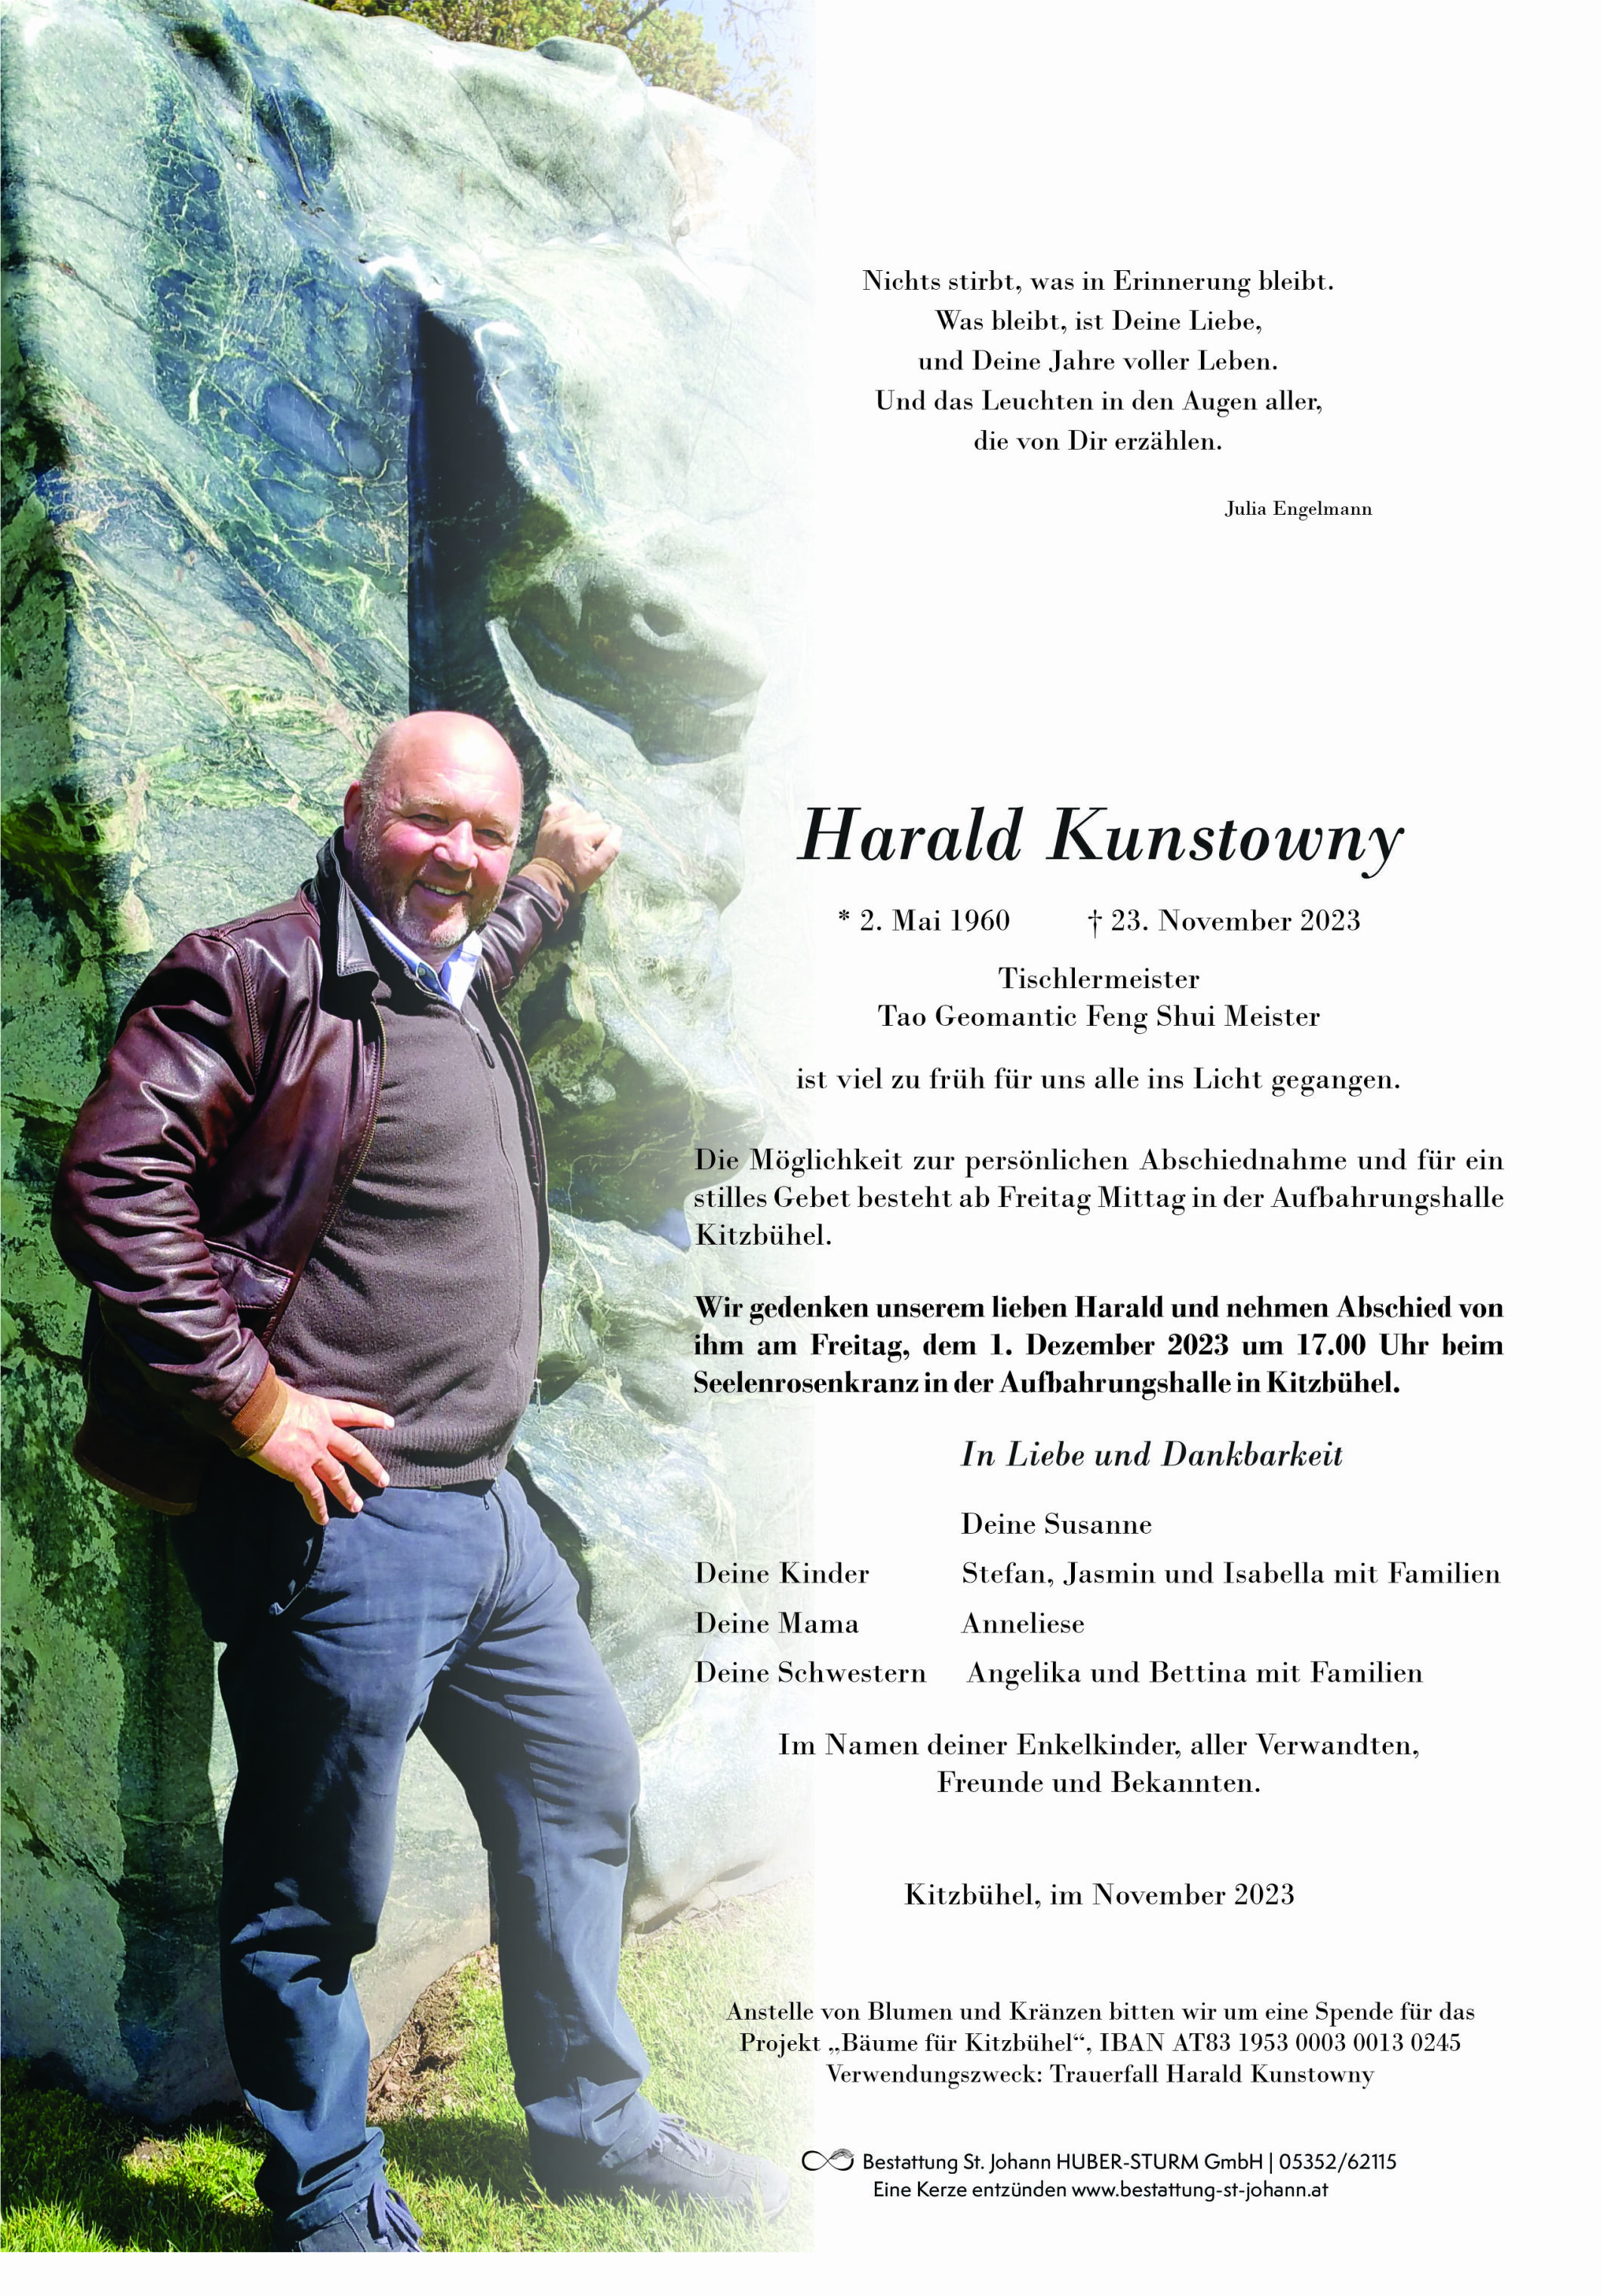 Harald Kunstowny